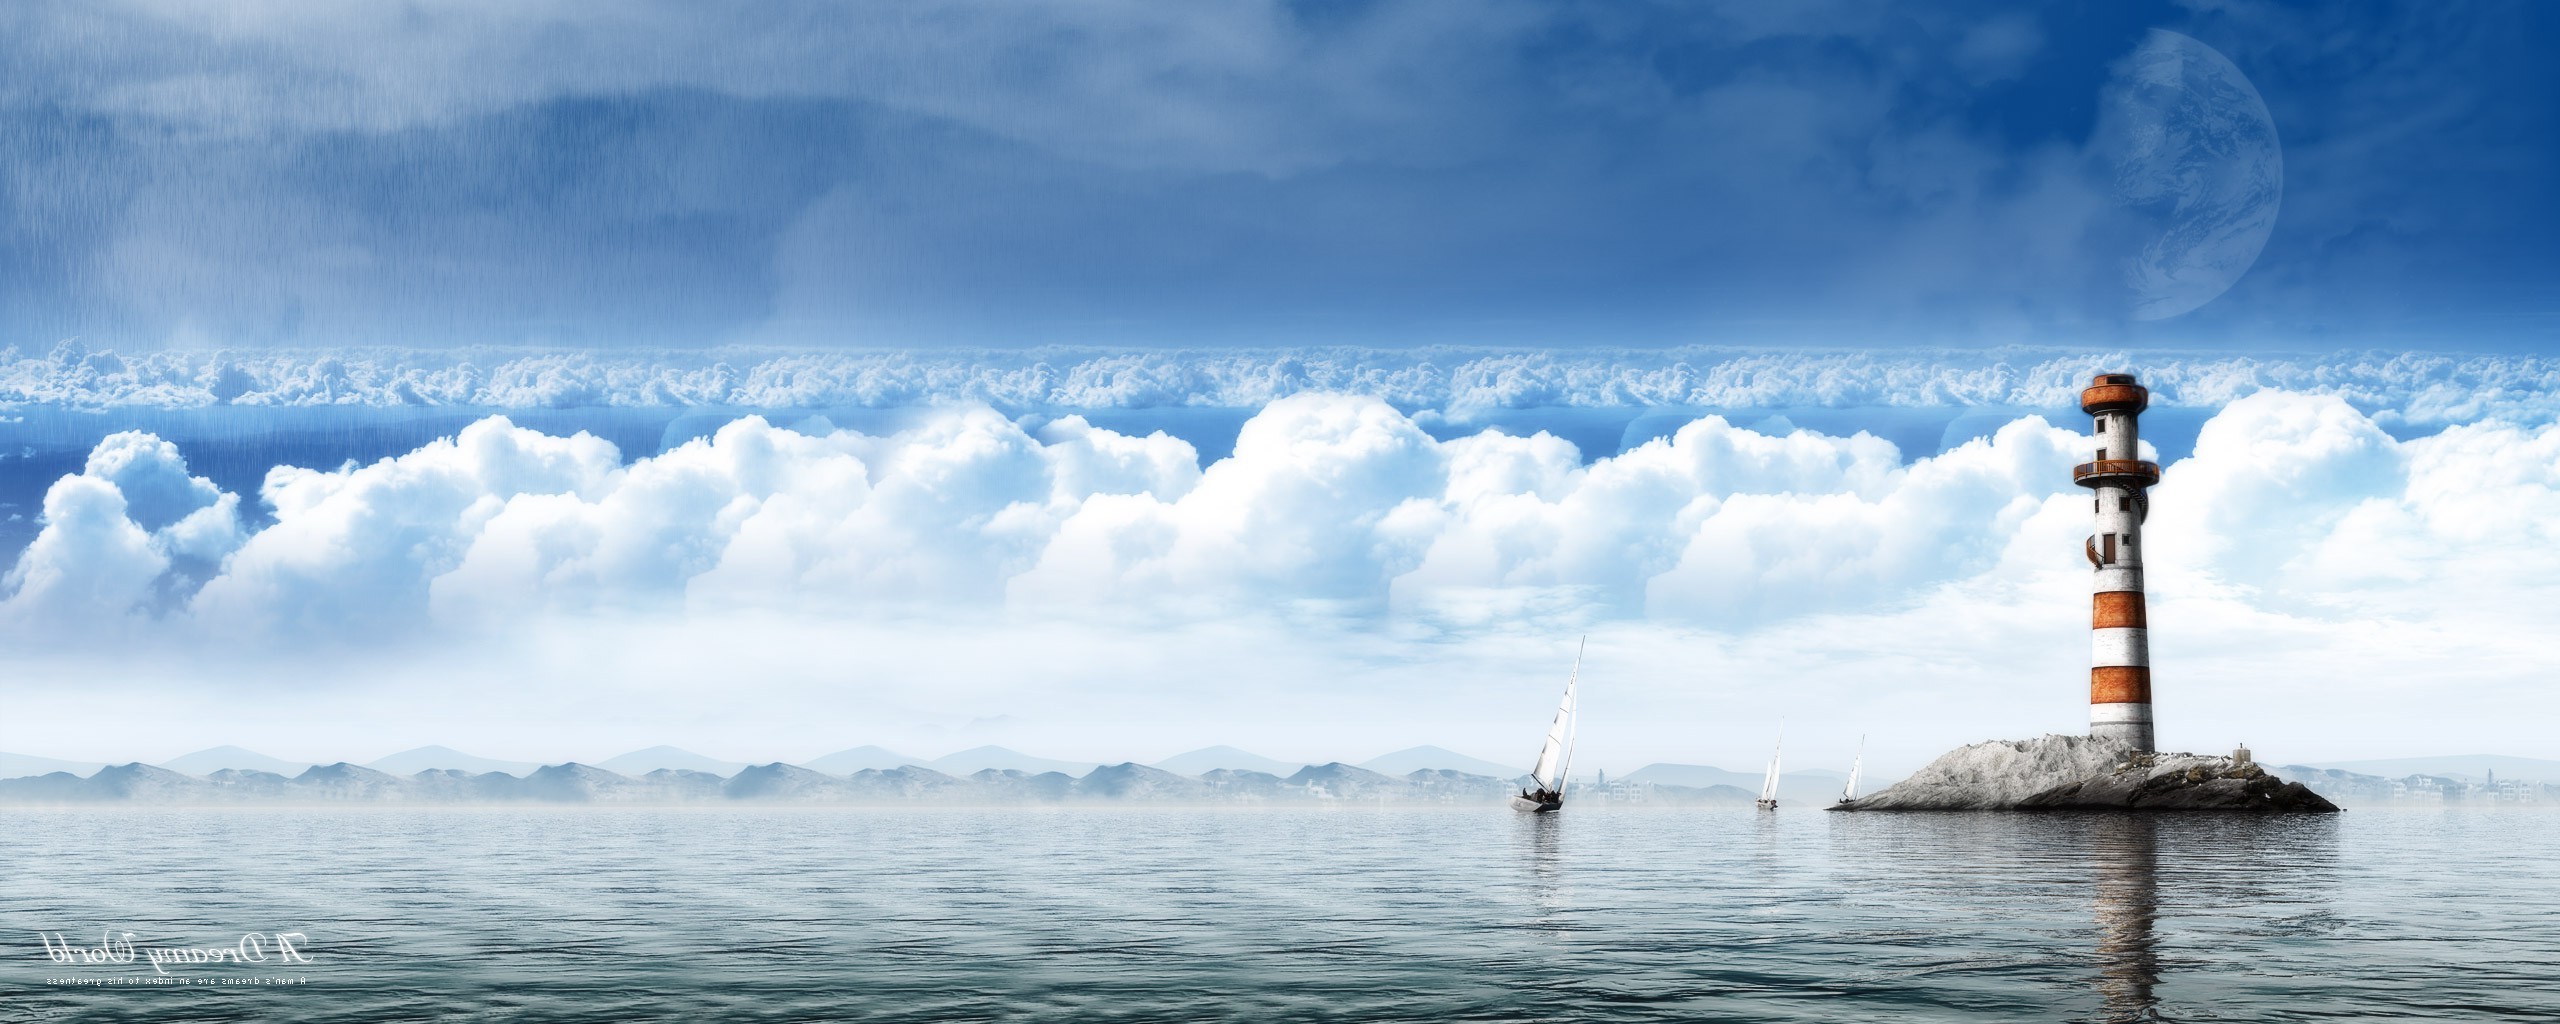 artwork, Landscape, Clouds Wallpaper